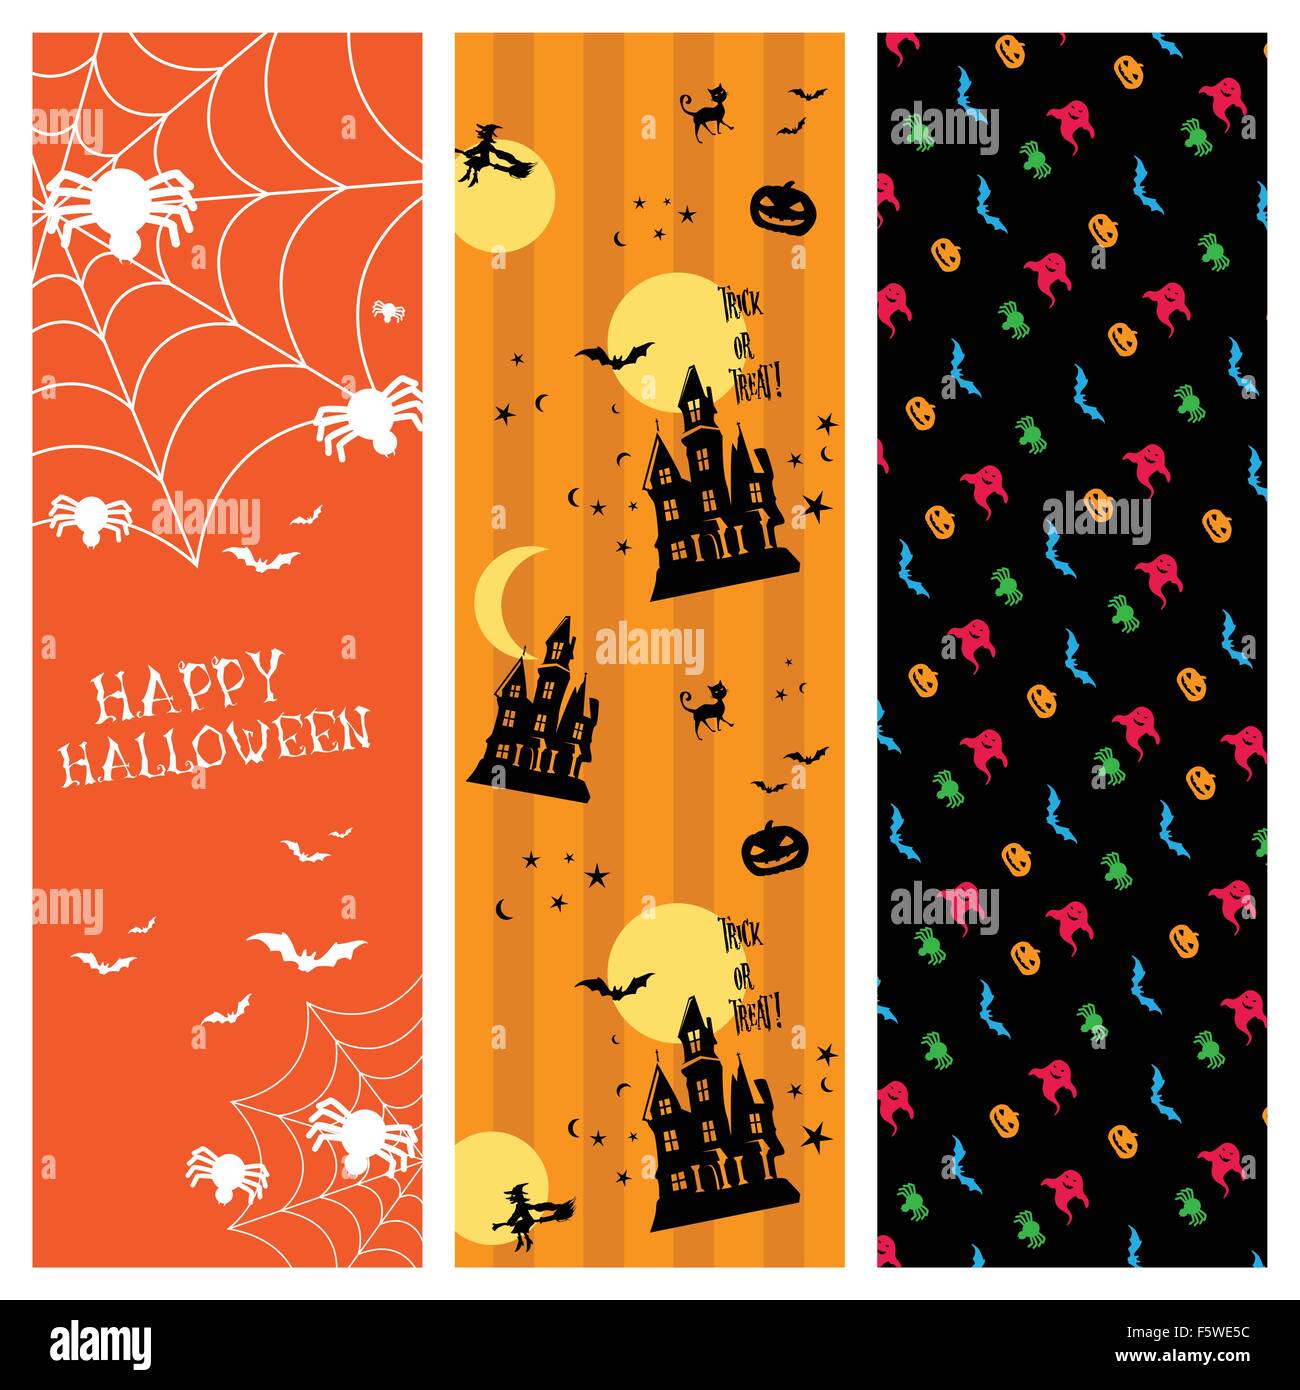 A vector illustration of Halloween banner design Stock Vector